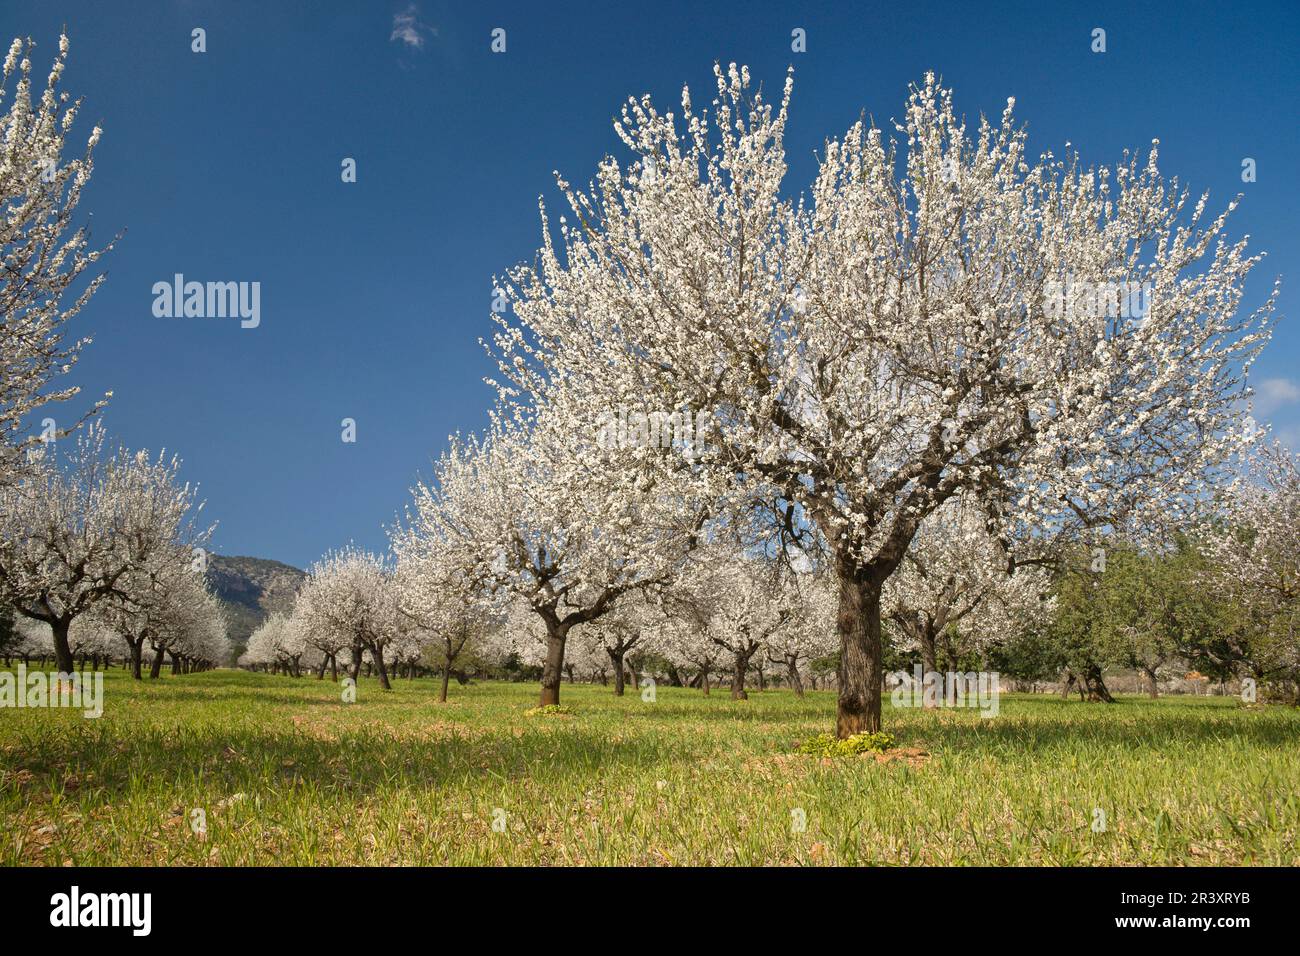 Almendros en flor, Prunus dulcis. S' Esglaieta. Mallorca.Islas Baleares. Spain. Stock Photo